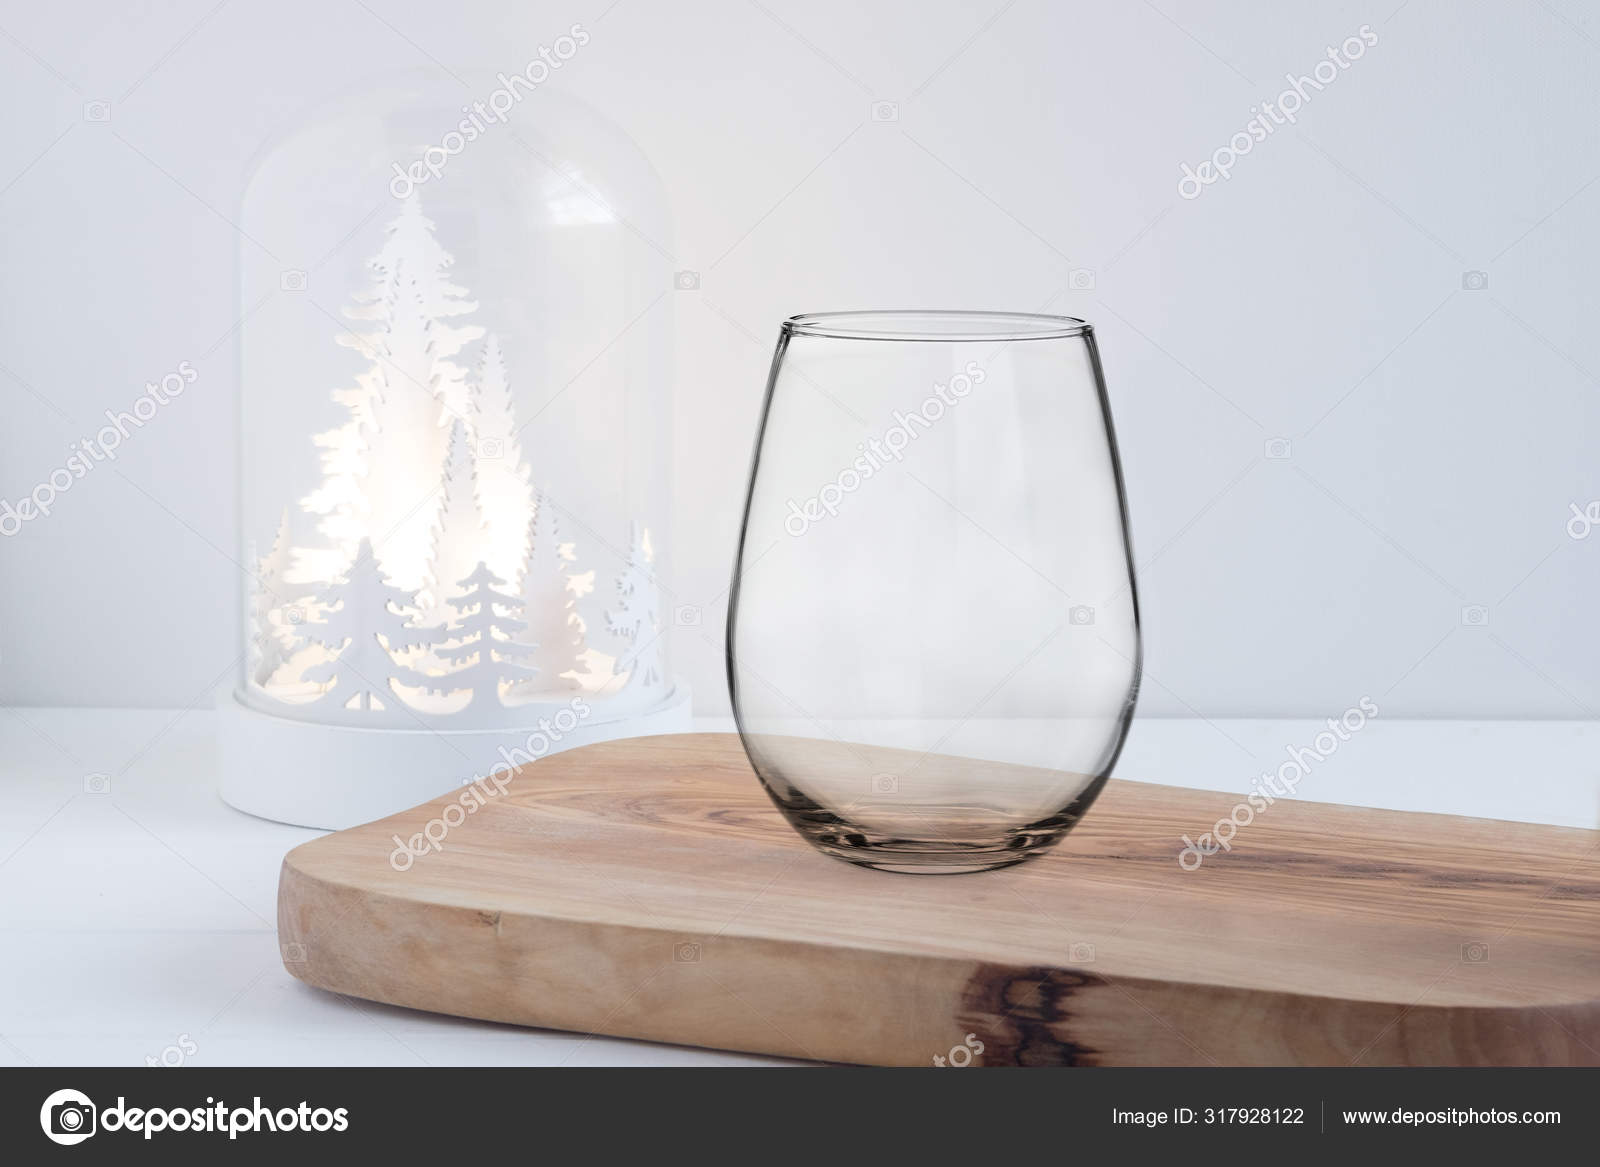 https://st3.depositphotos.com/3761637/31792/i/1600/depositphotos_317928122-stock-photo-christmas-stemless-wine-glass-mockup.jpg